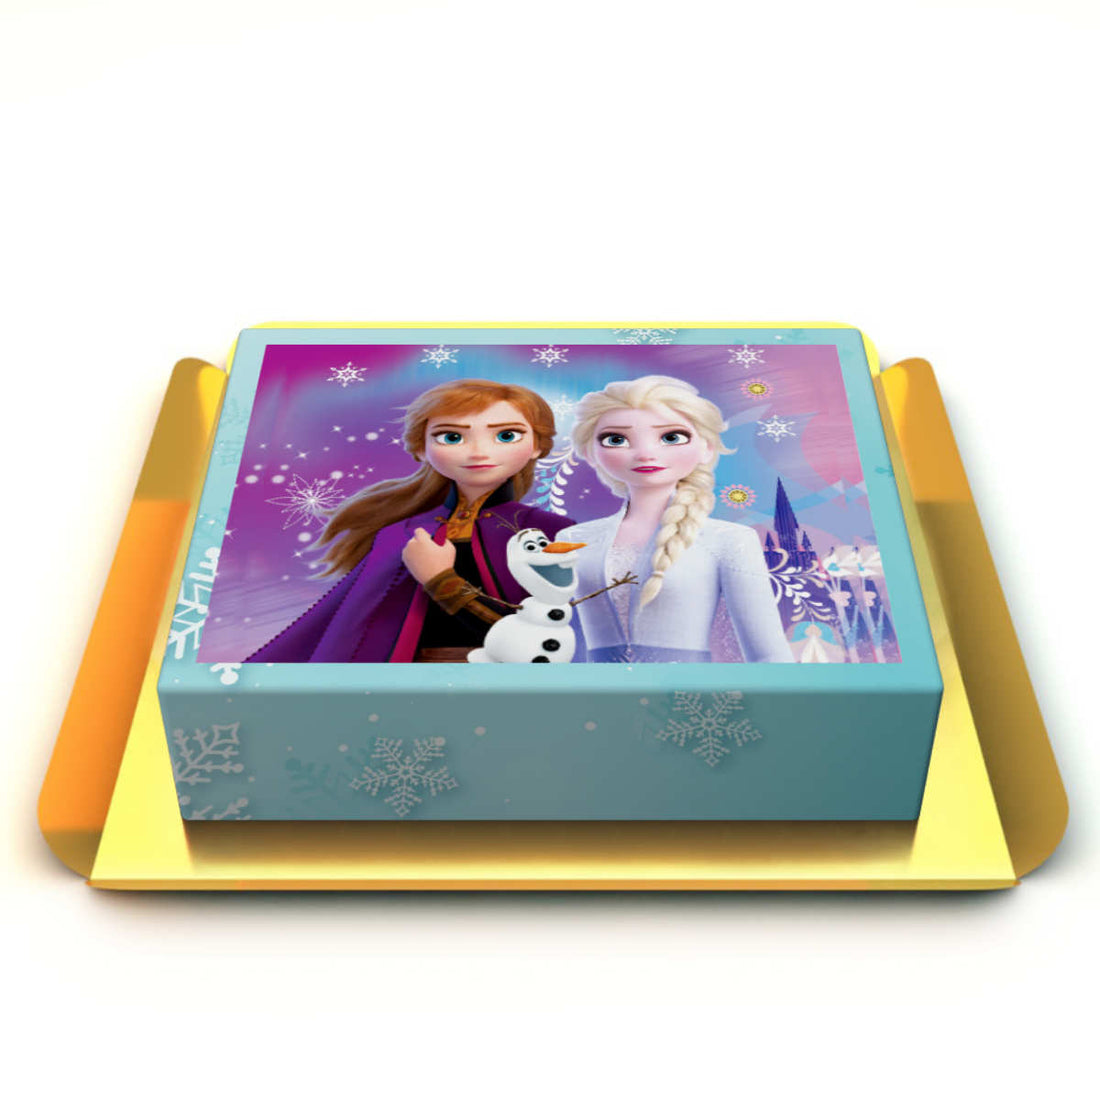 Elsa ve Anna resimli pasta